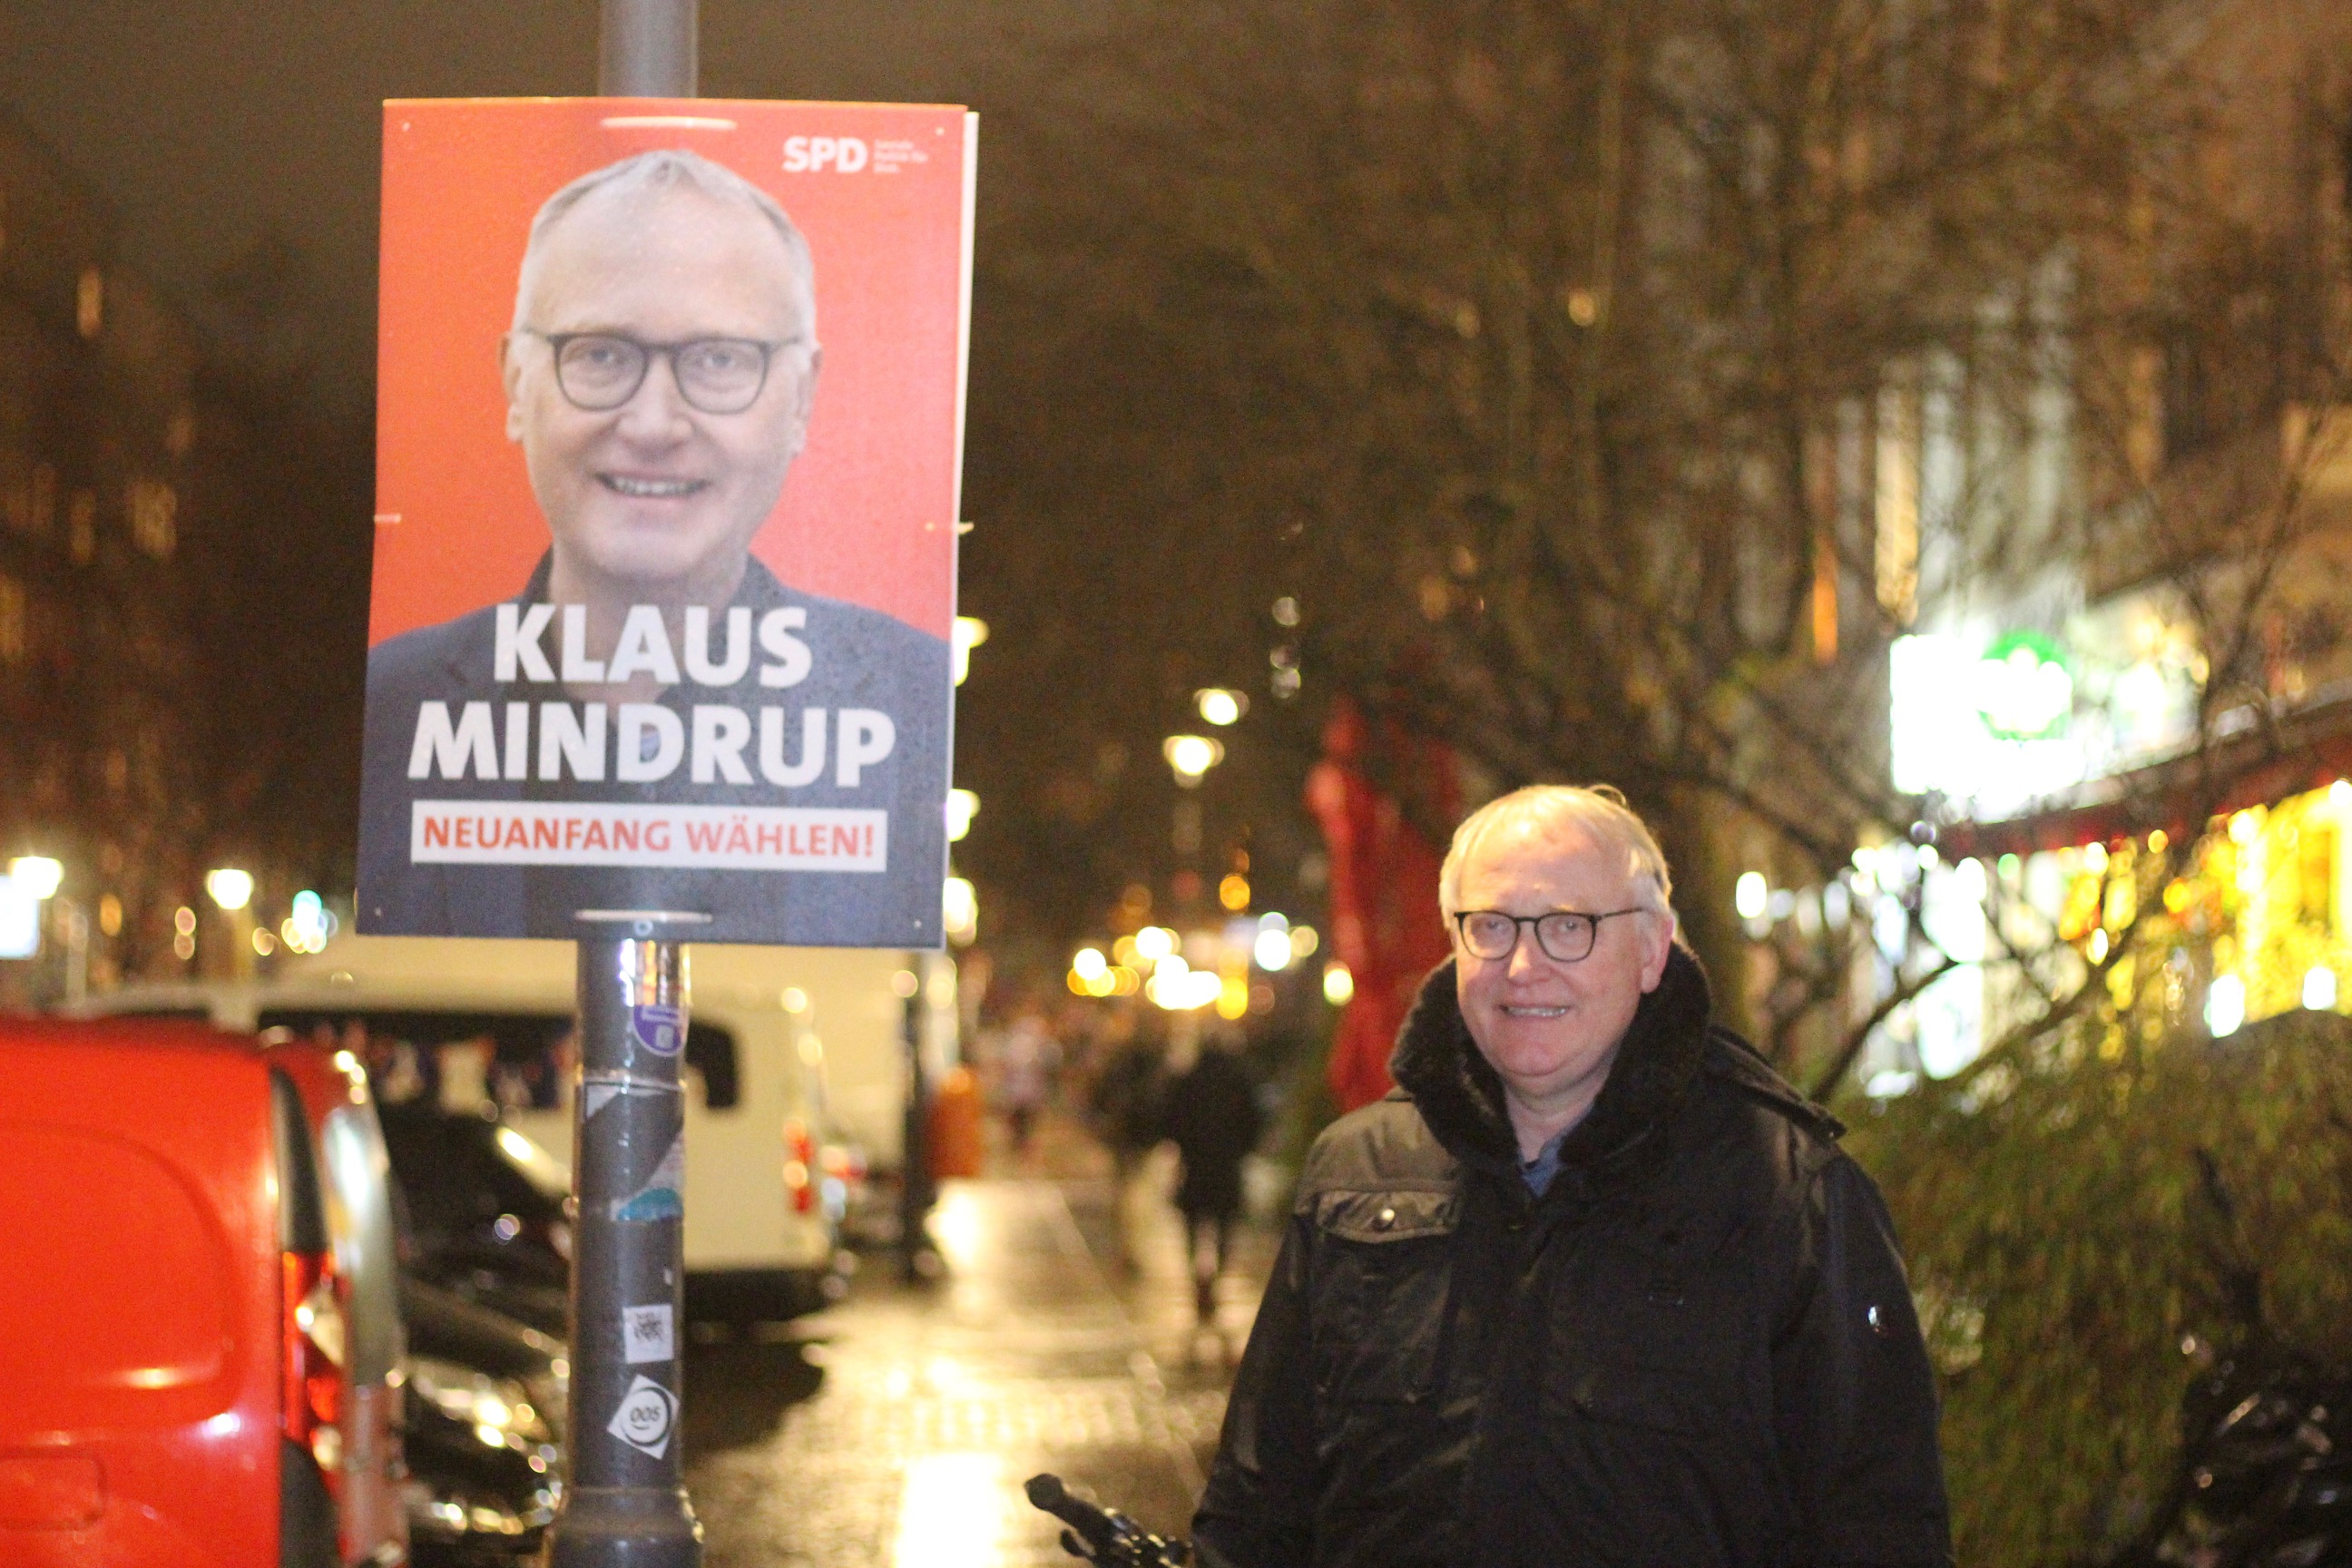 Will einen Neuanfang: SPD-Kandat Klaus Mindrup mit Wahlplakat